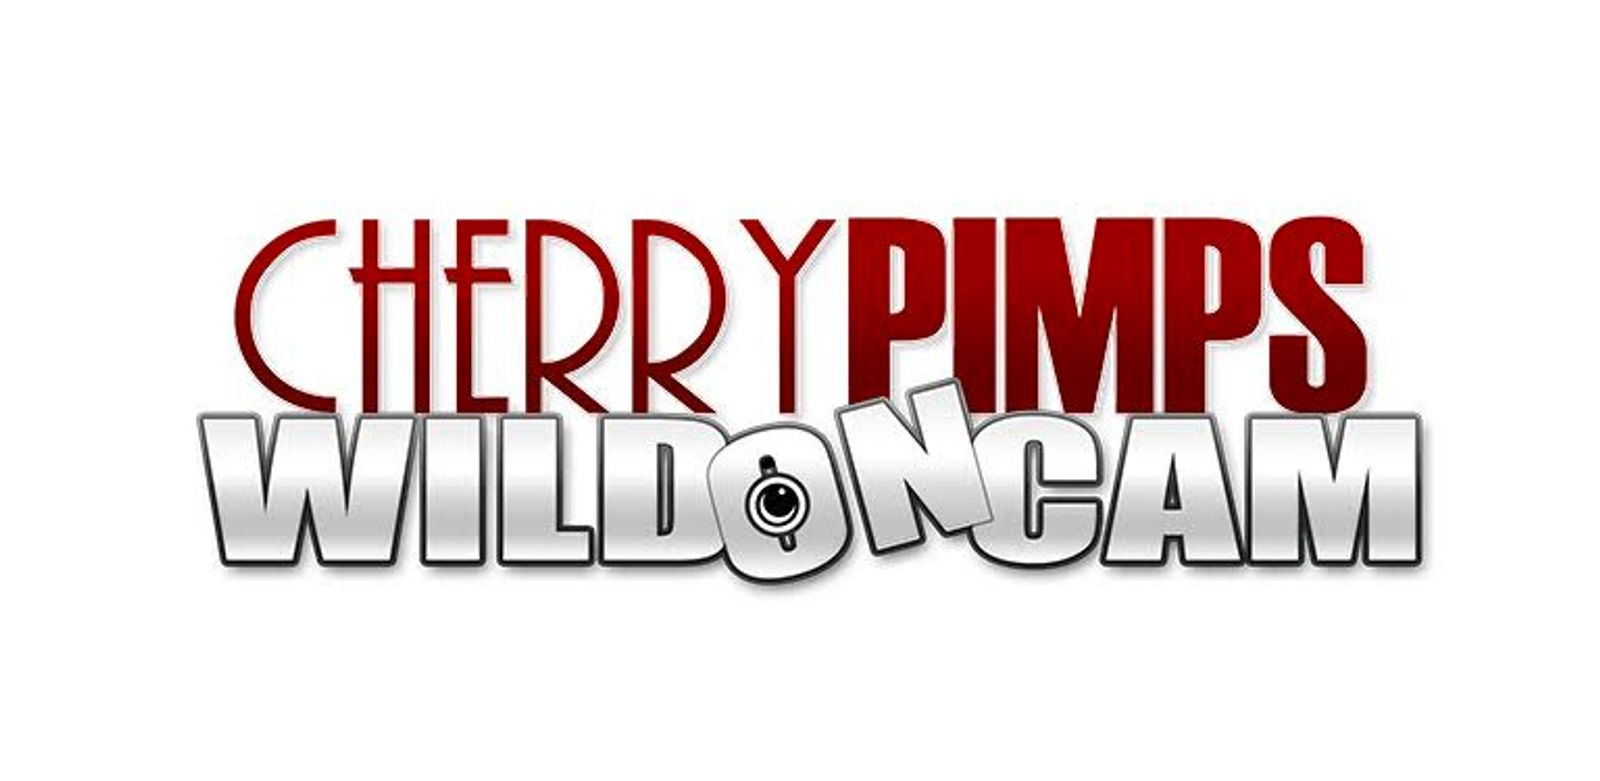 Cherry Pimps’ WildOnCam Announces Weekly Shows